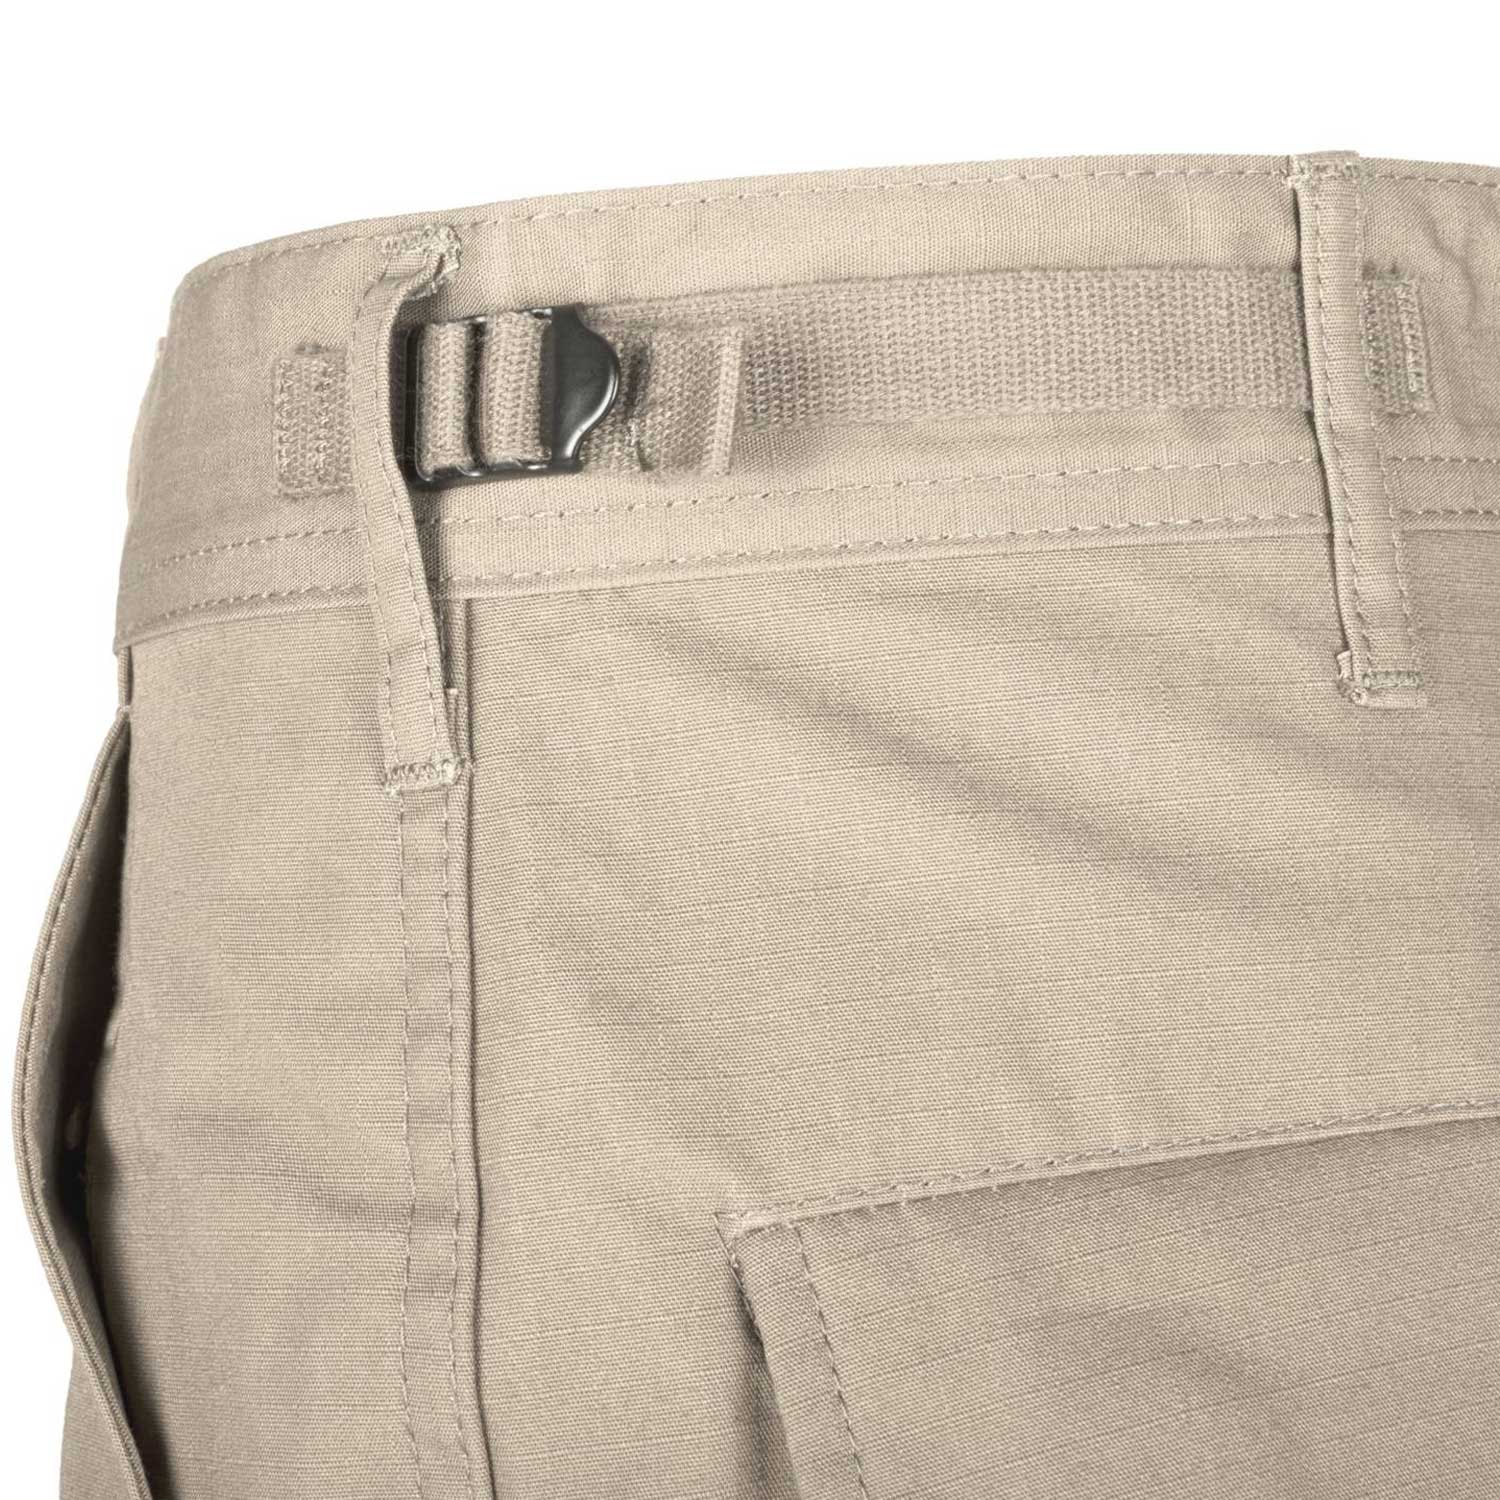 Spodnie Helikon BDU Cotton Rip-Stop - Khaki